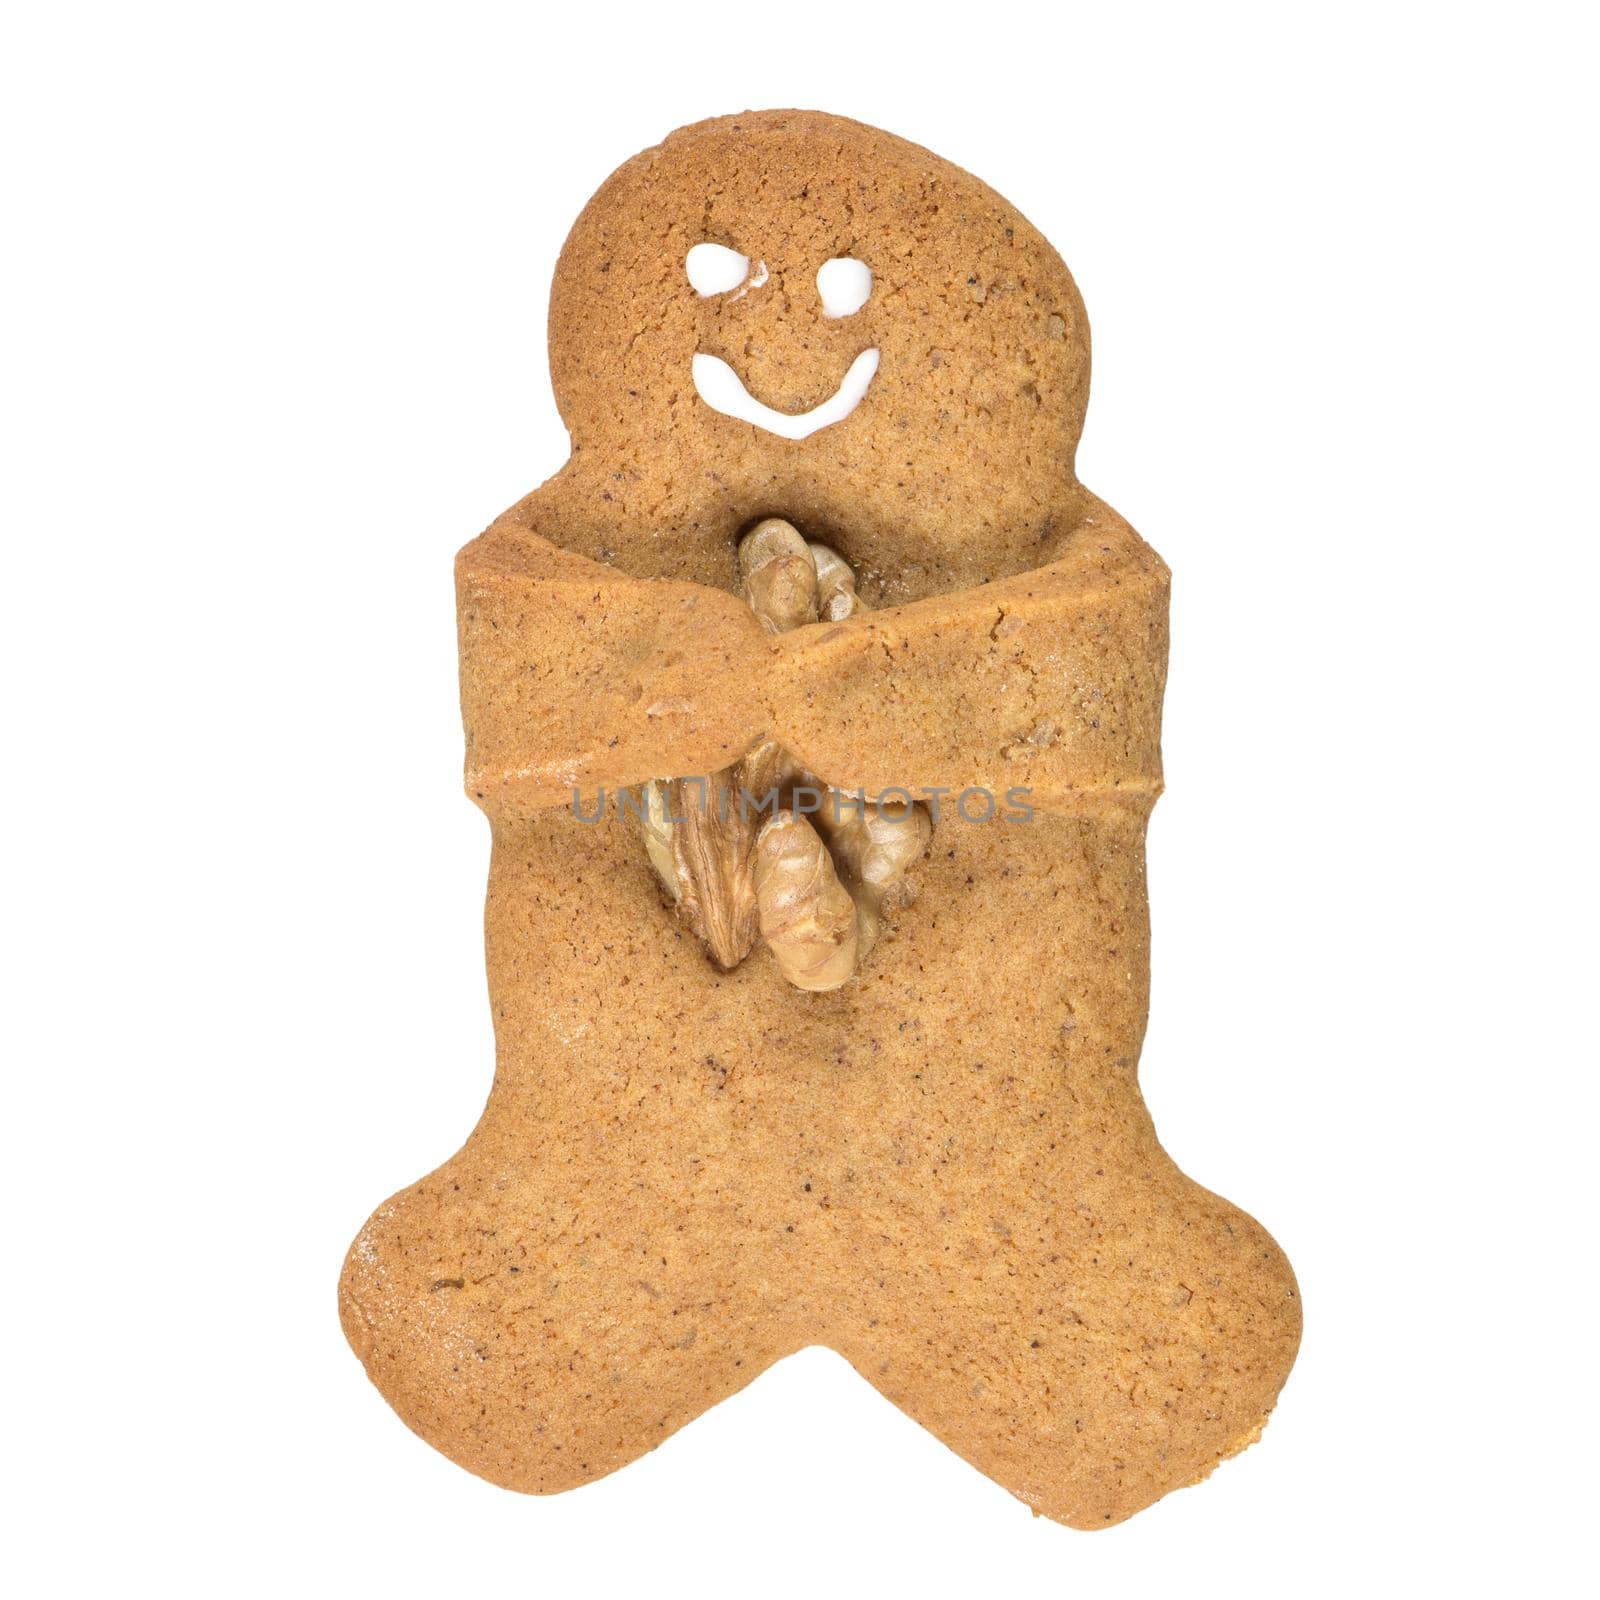 Gingerbread man cookie embrancing walnut by homydesign